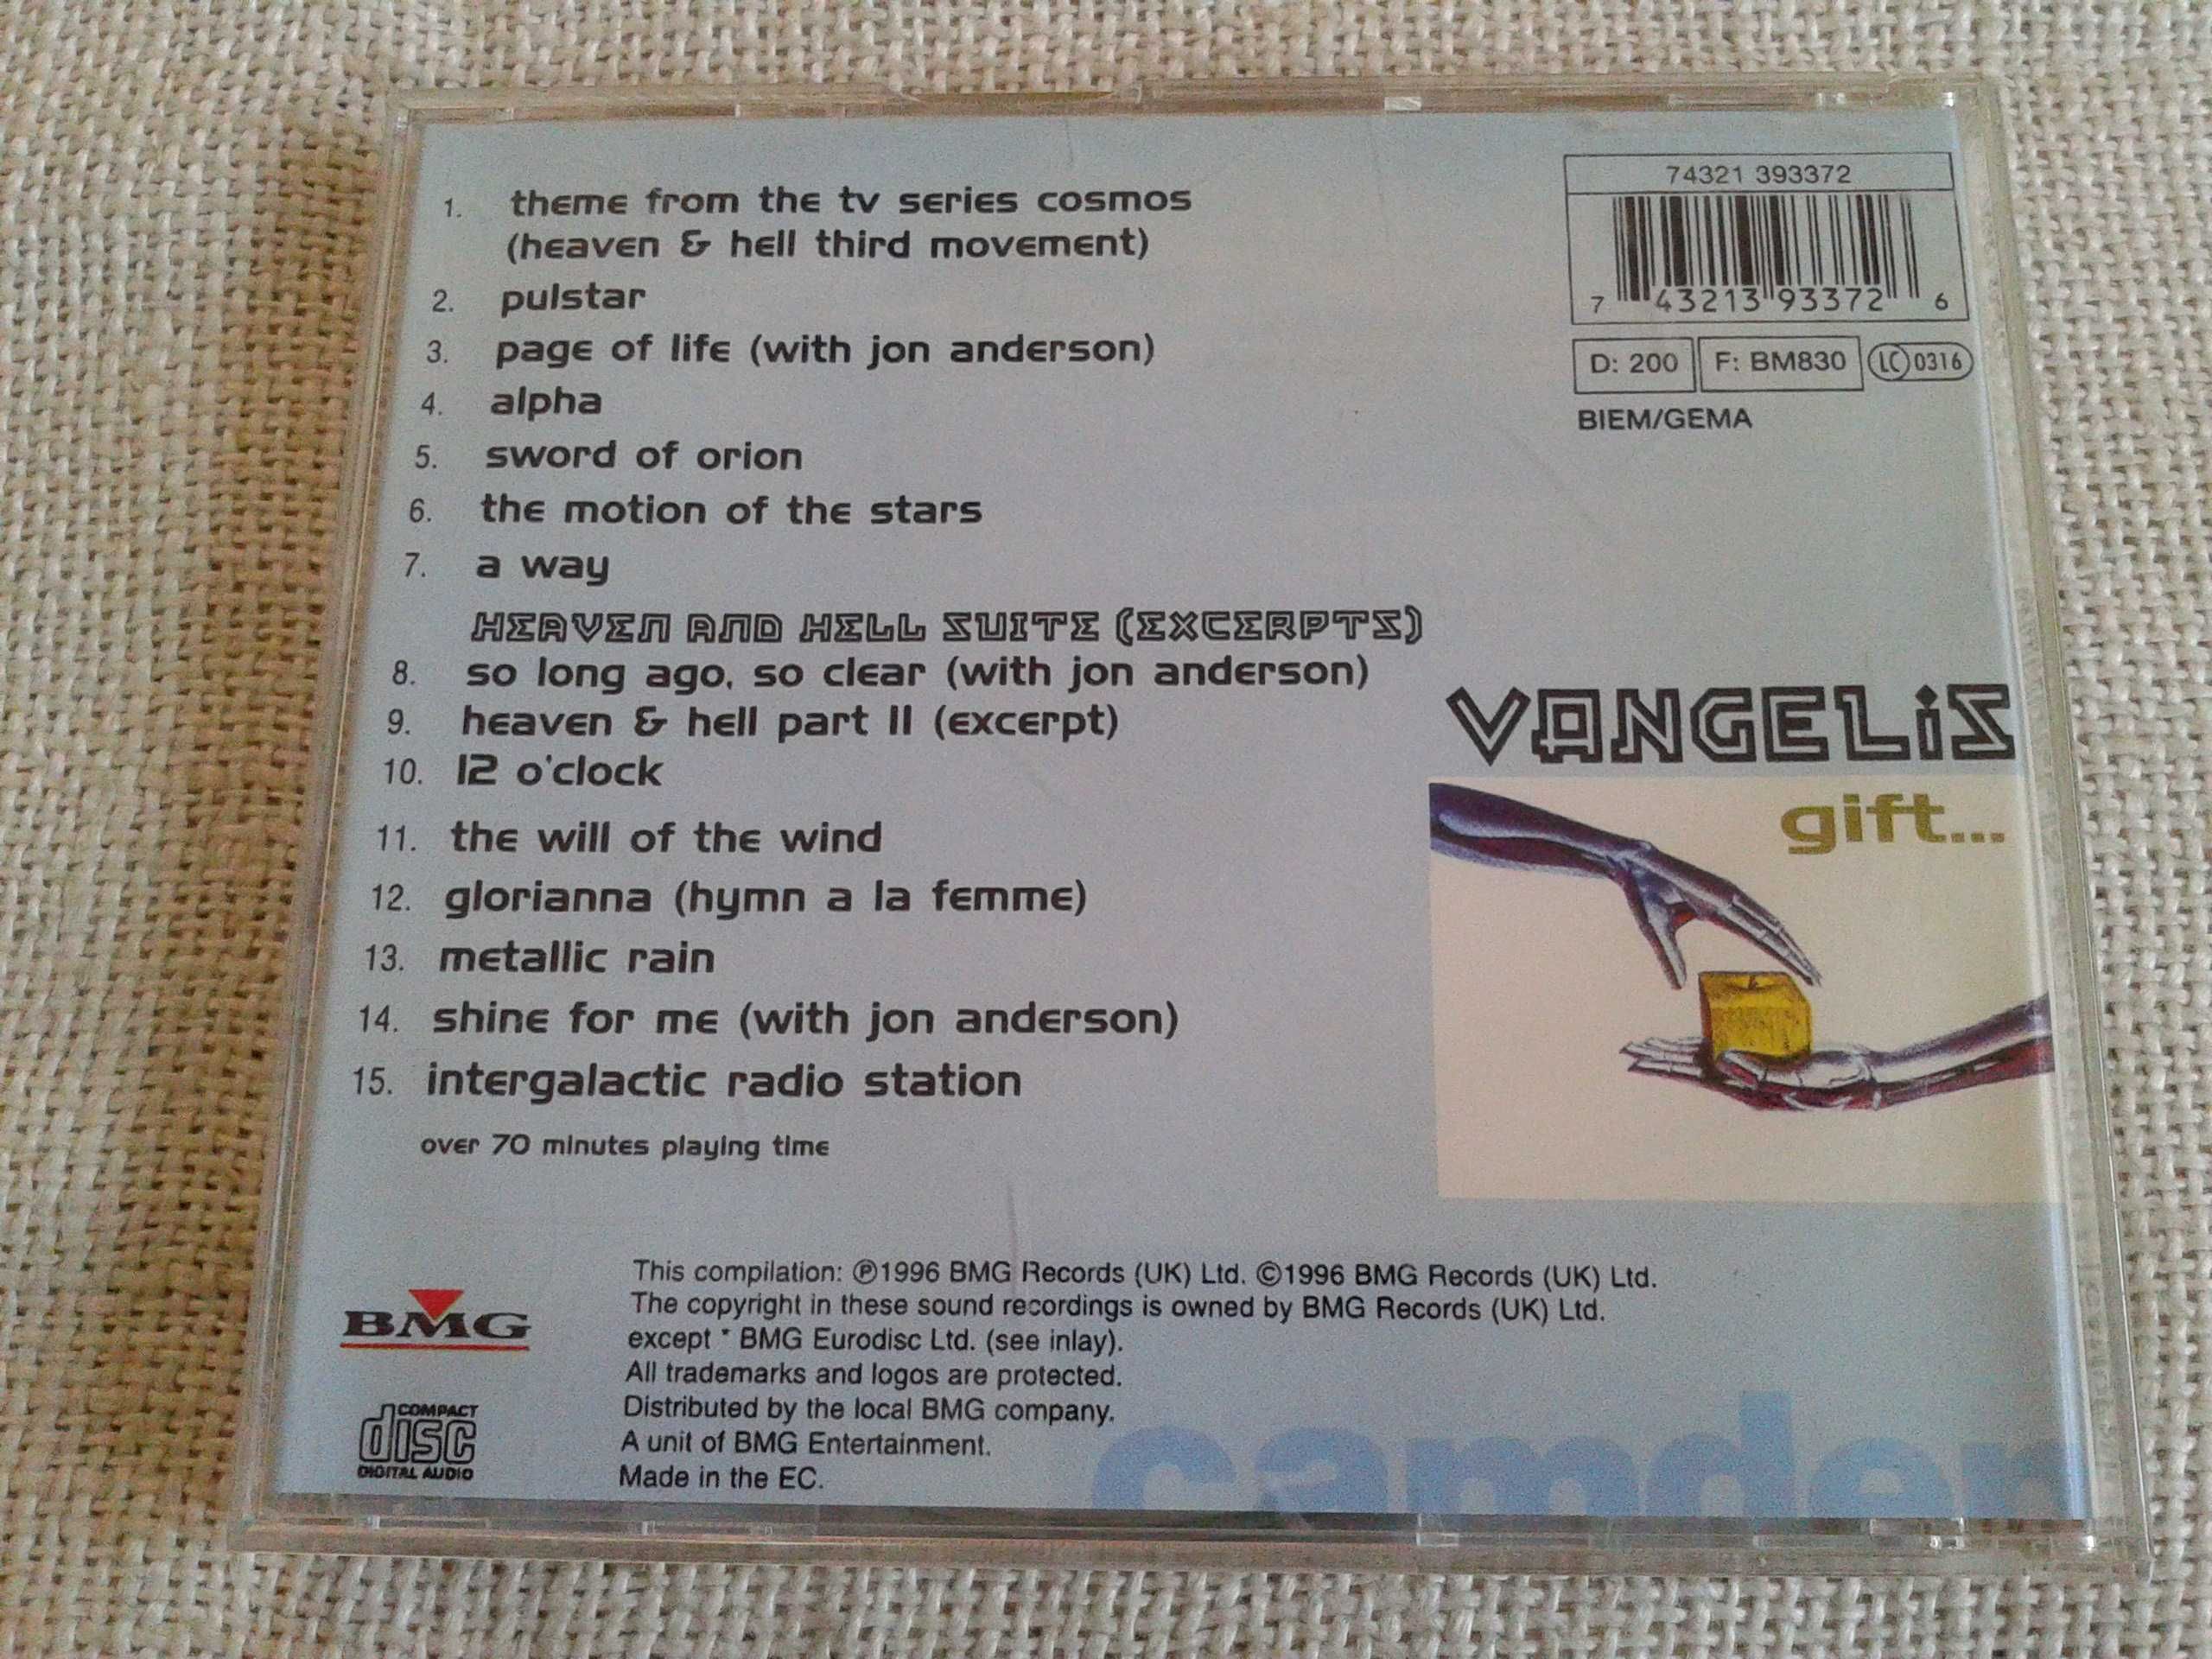 Vangelis - Gift  CD